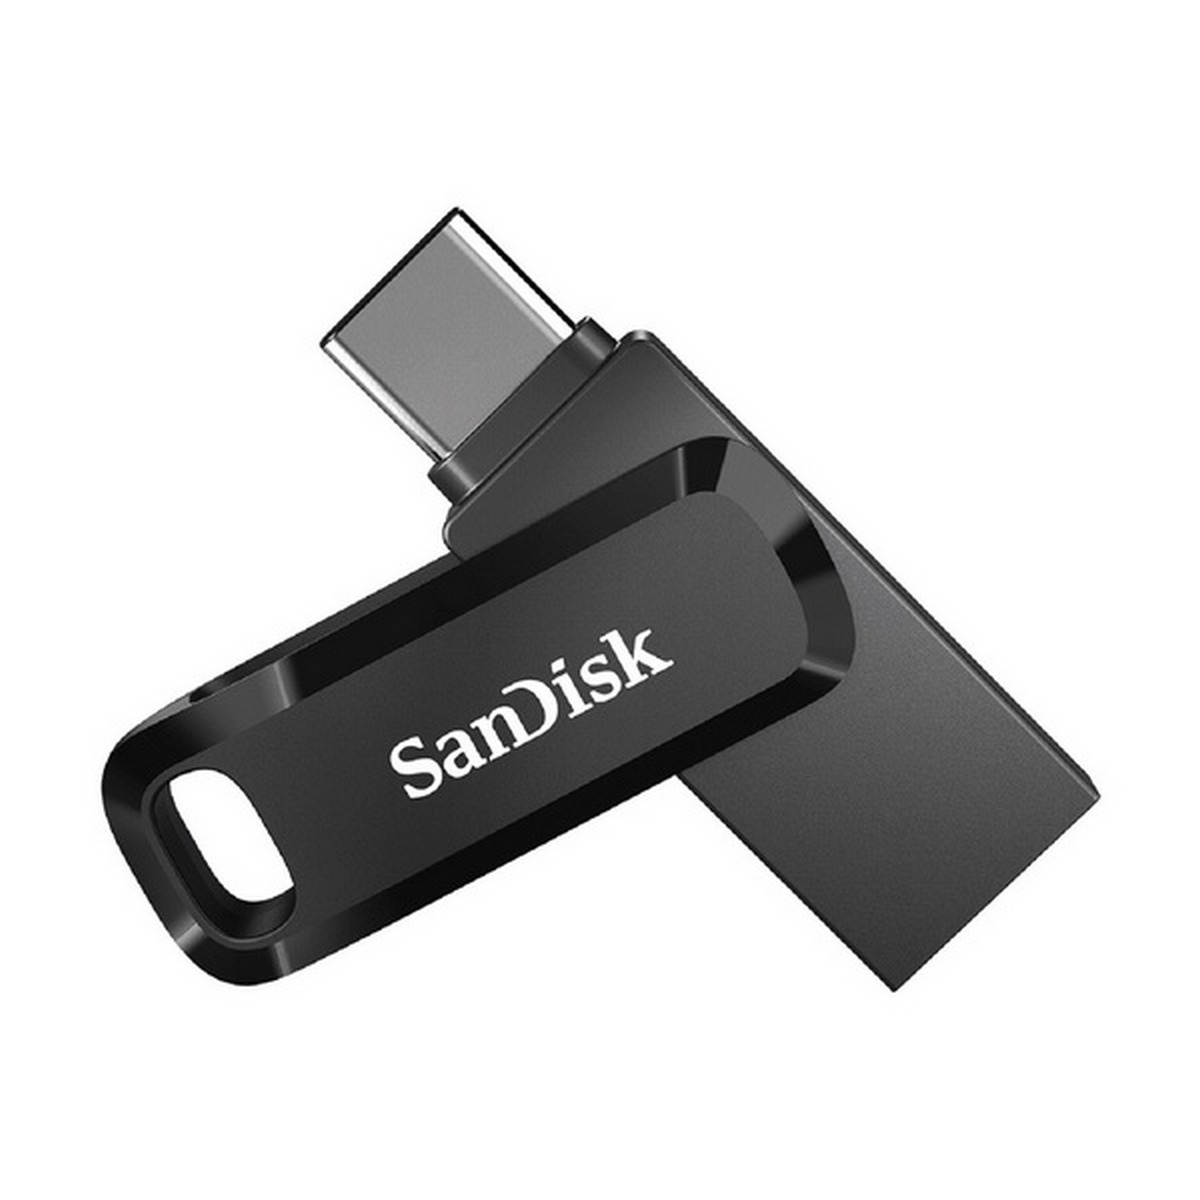 SANDISK Flash Drive (256 GB) Ultra Dual Drive Go